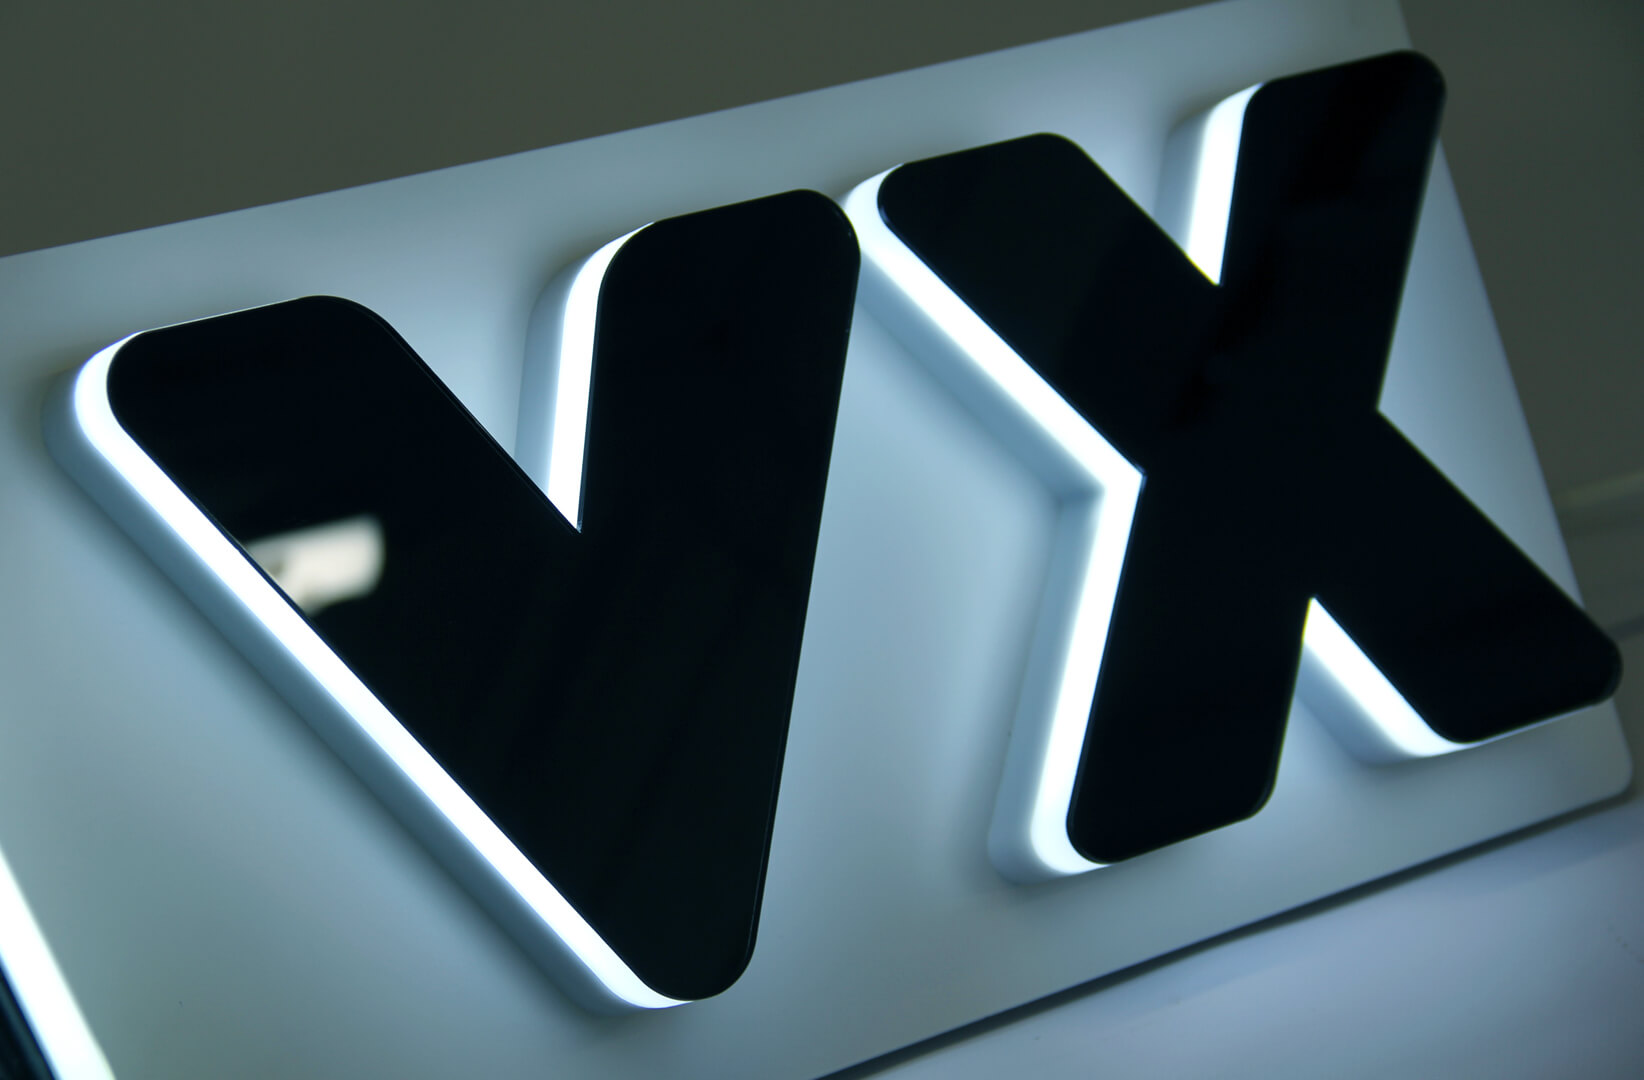 VX - LED side light lettering